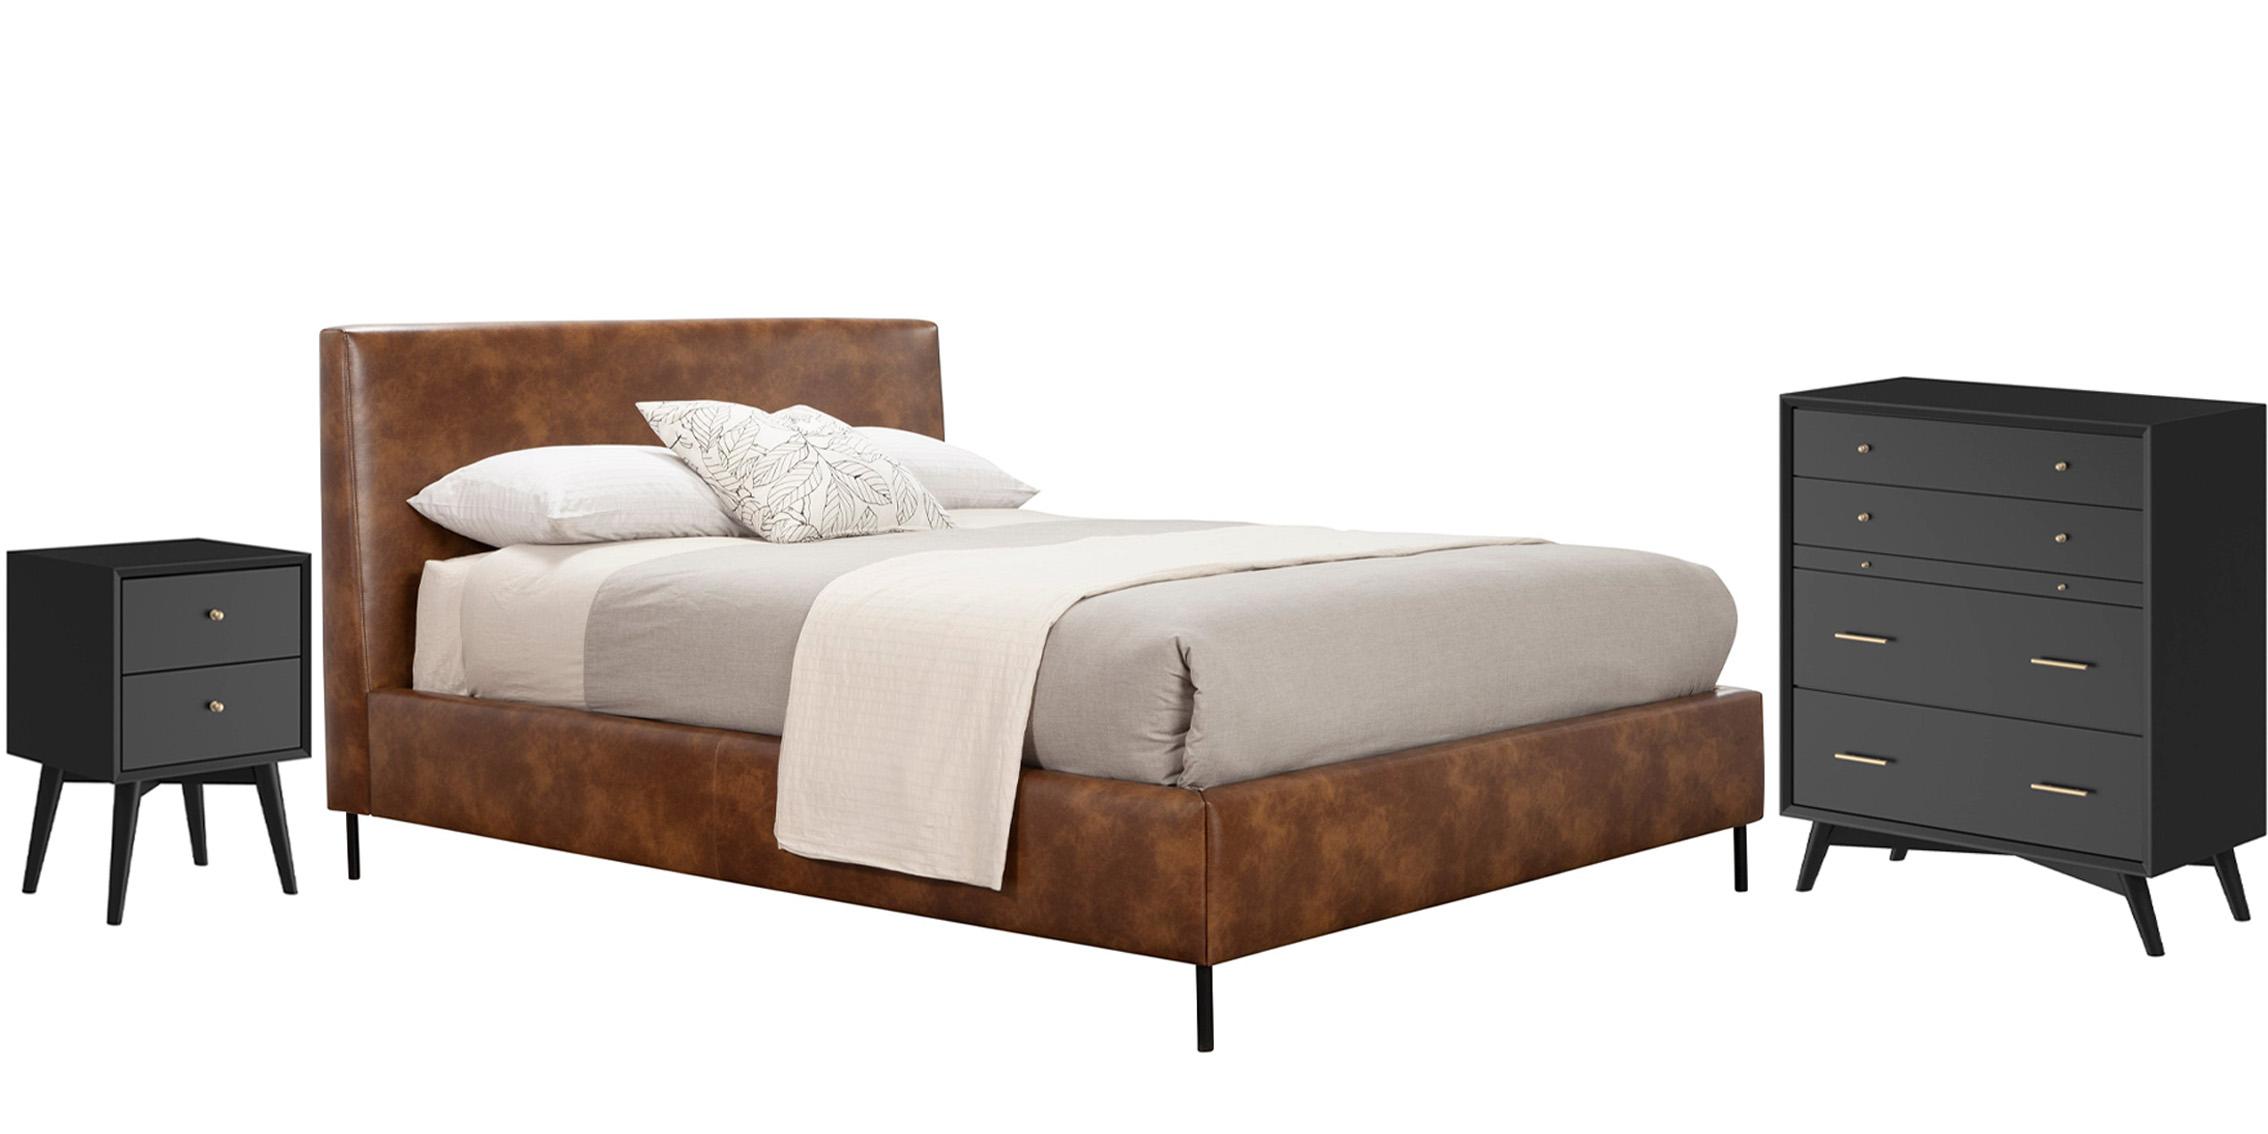 Modern, Rustic Platform Bedroom Set SOPHIA/FLYNN 6902F-BRN-Set-3-BLK in Brown, Black Faux Leather